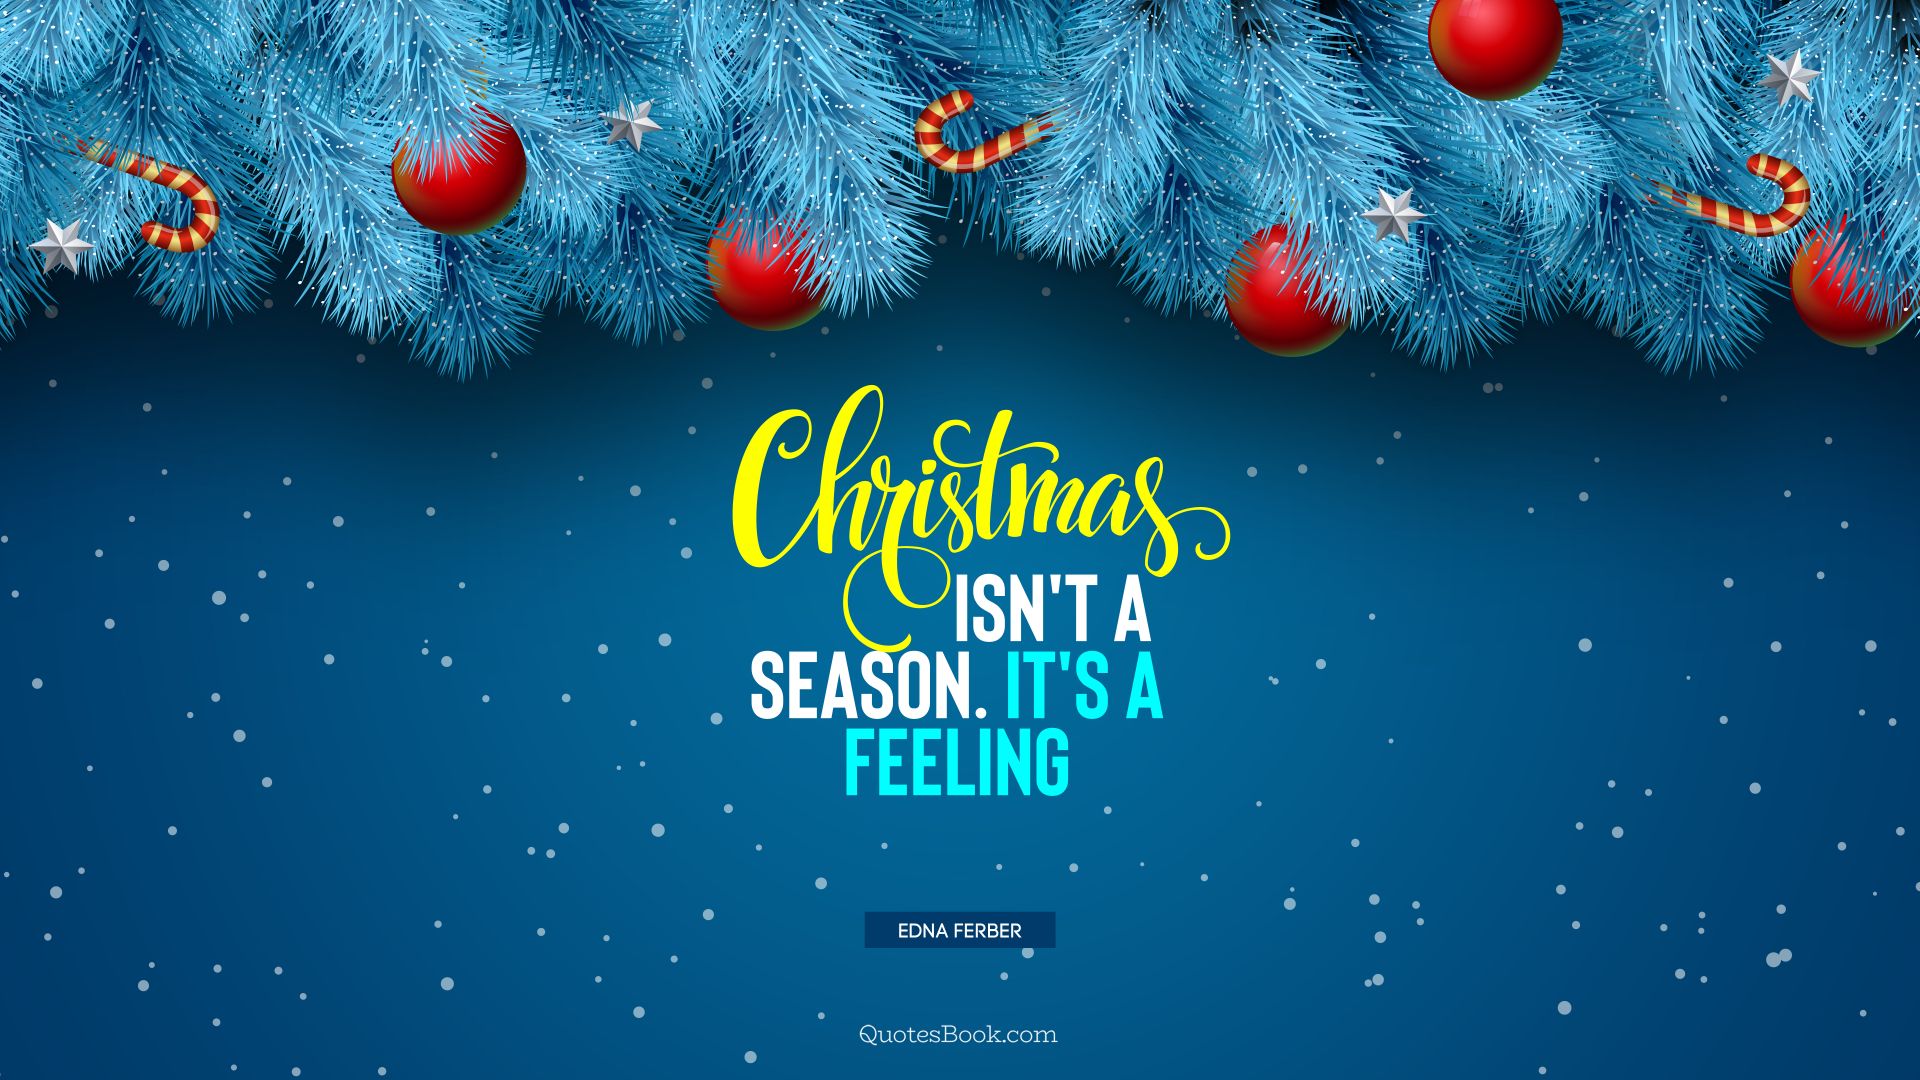 Christmas isn't a season. It's a feeling. - Quote by Edna Ferber